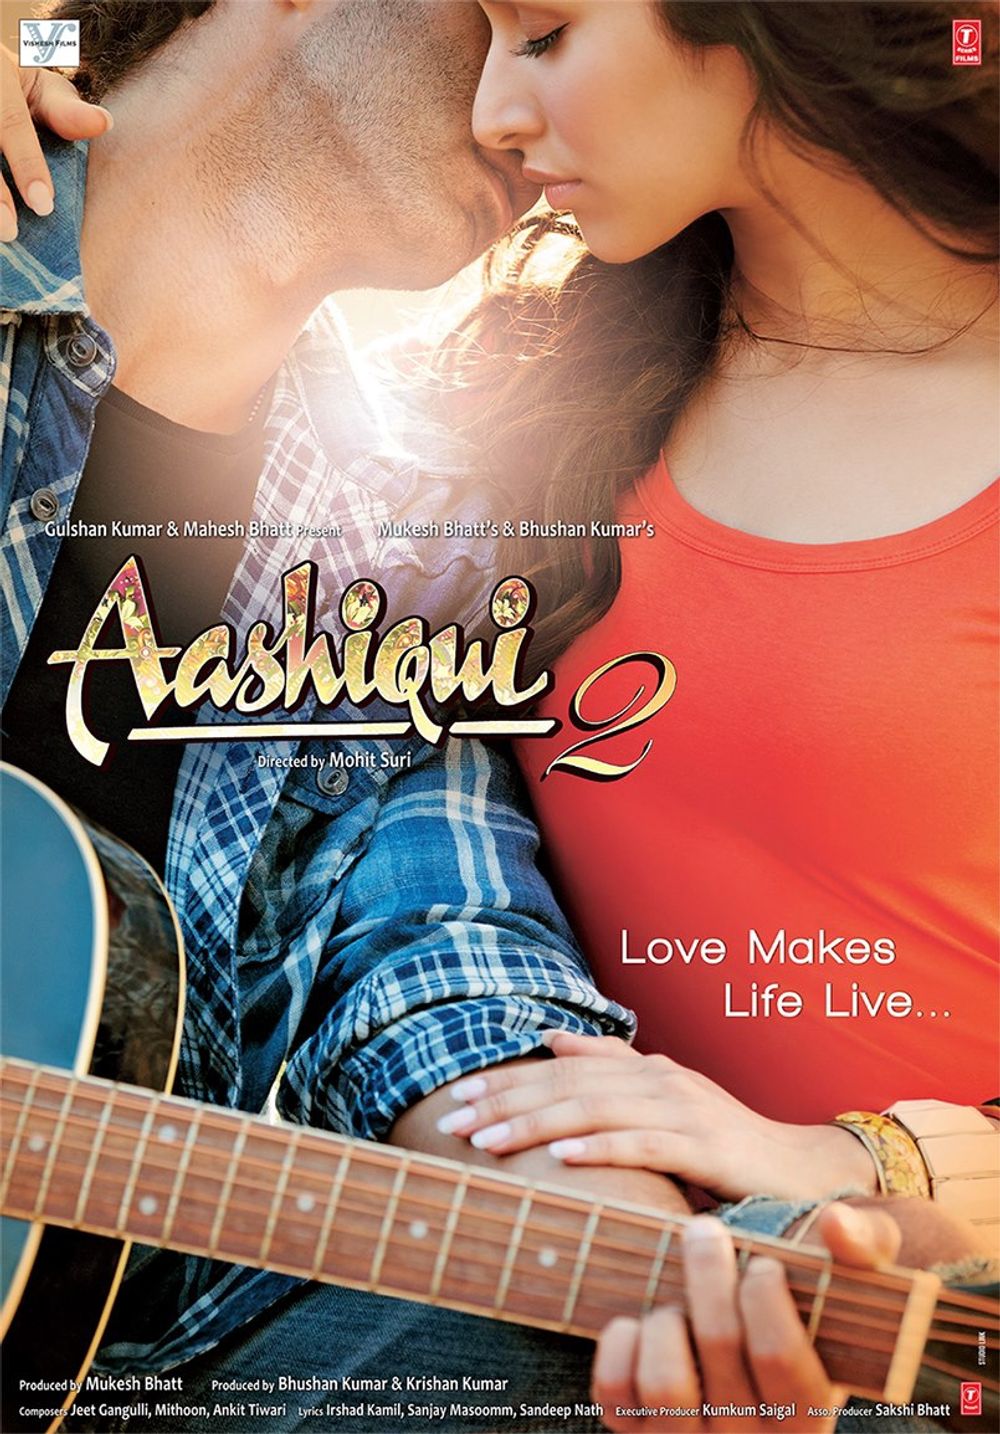 Aashiqui 2 on Moviebuff.com